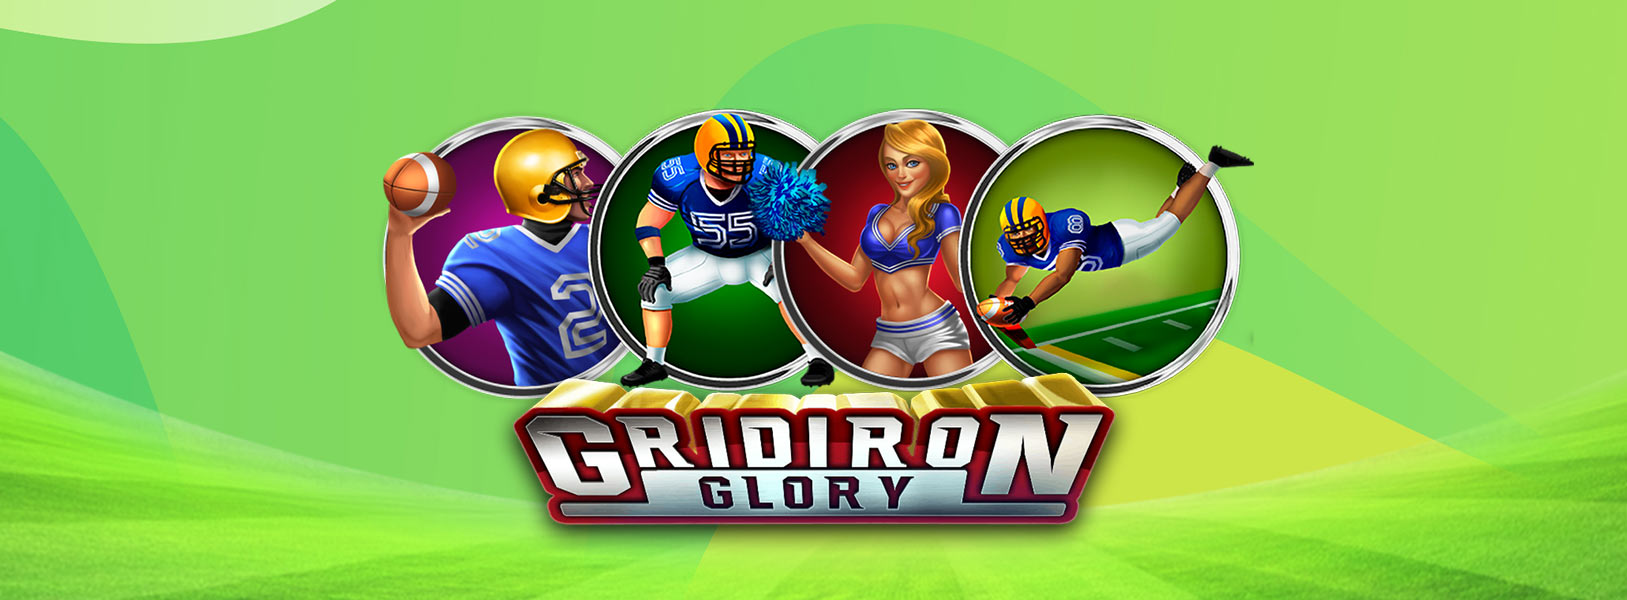 YOUR SUPER BOWL SLOT: GRIDIRON GLORY 